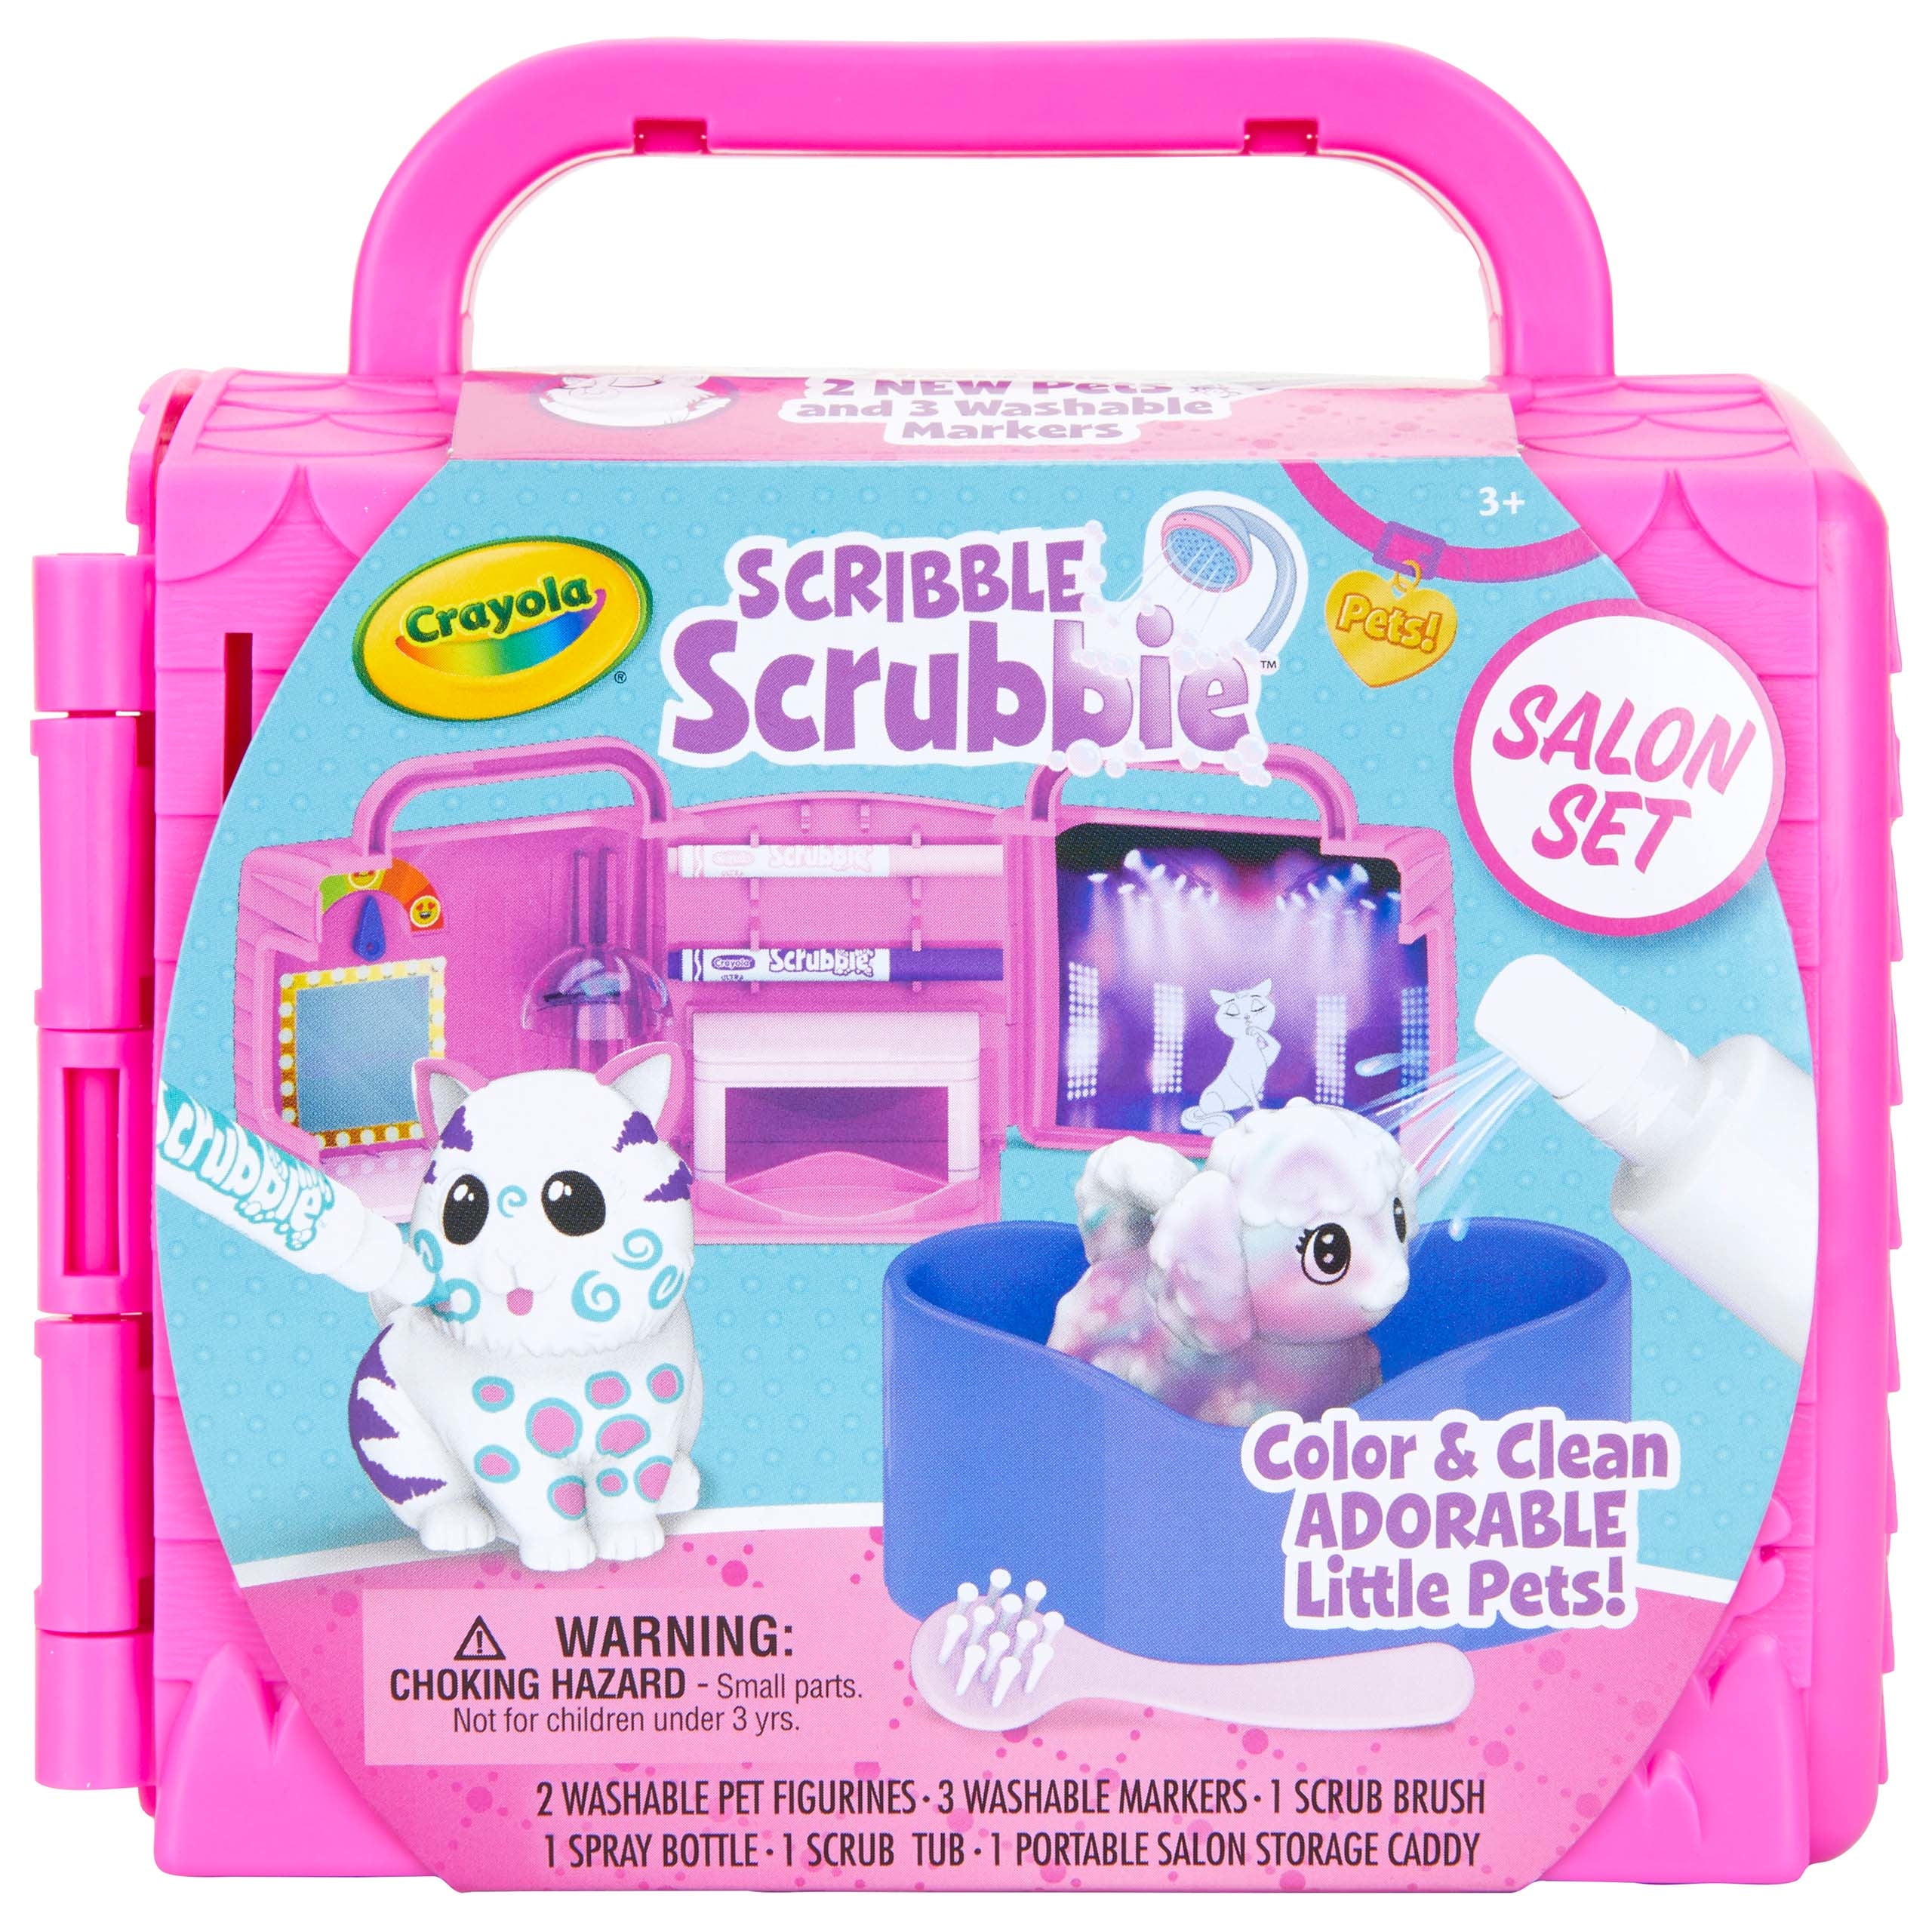 Crayola Scribble Scrubbie Pets TV Spot, 'So How's It Look?' 